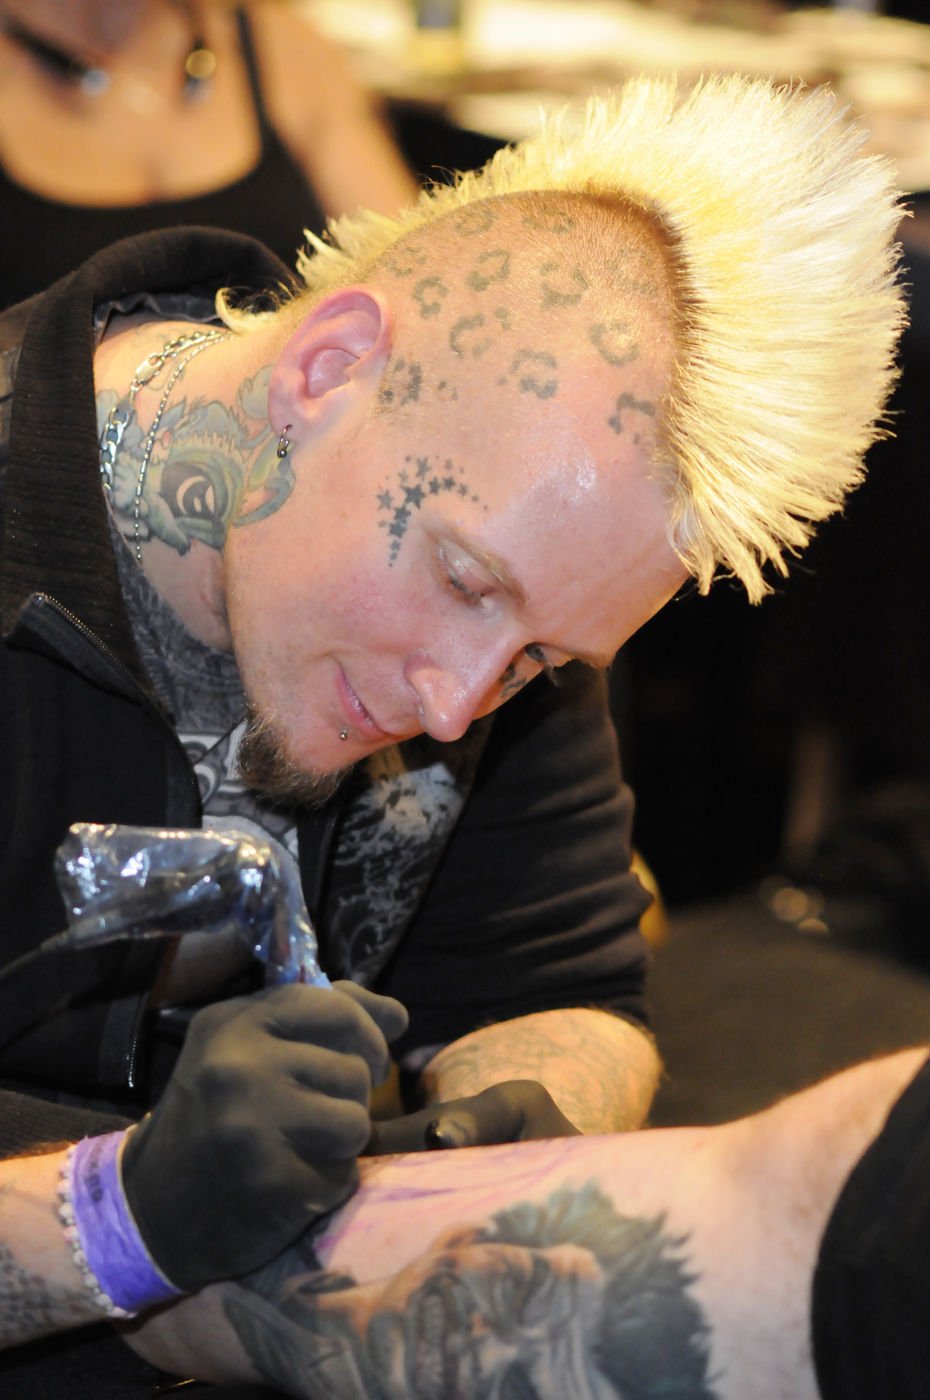 Tattoo pros compare notes, ink at expo in A.C. | Lifestyles | pressofatlanticcity.com